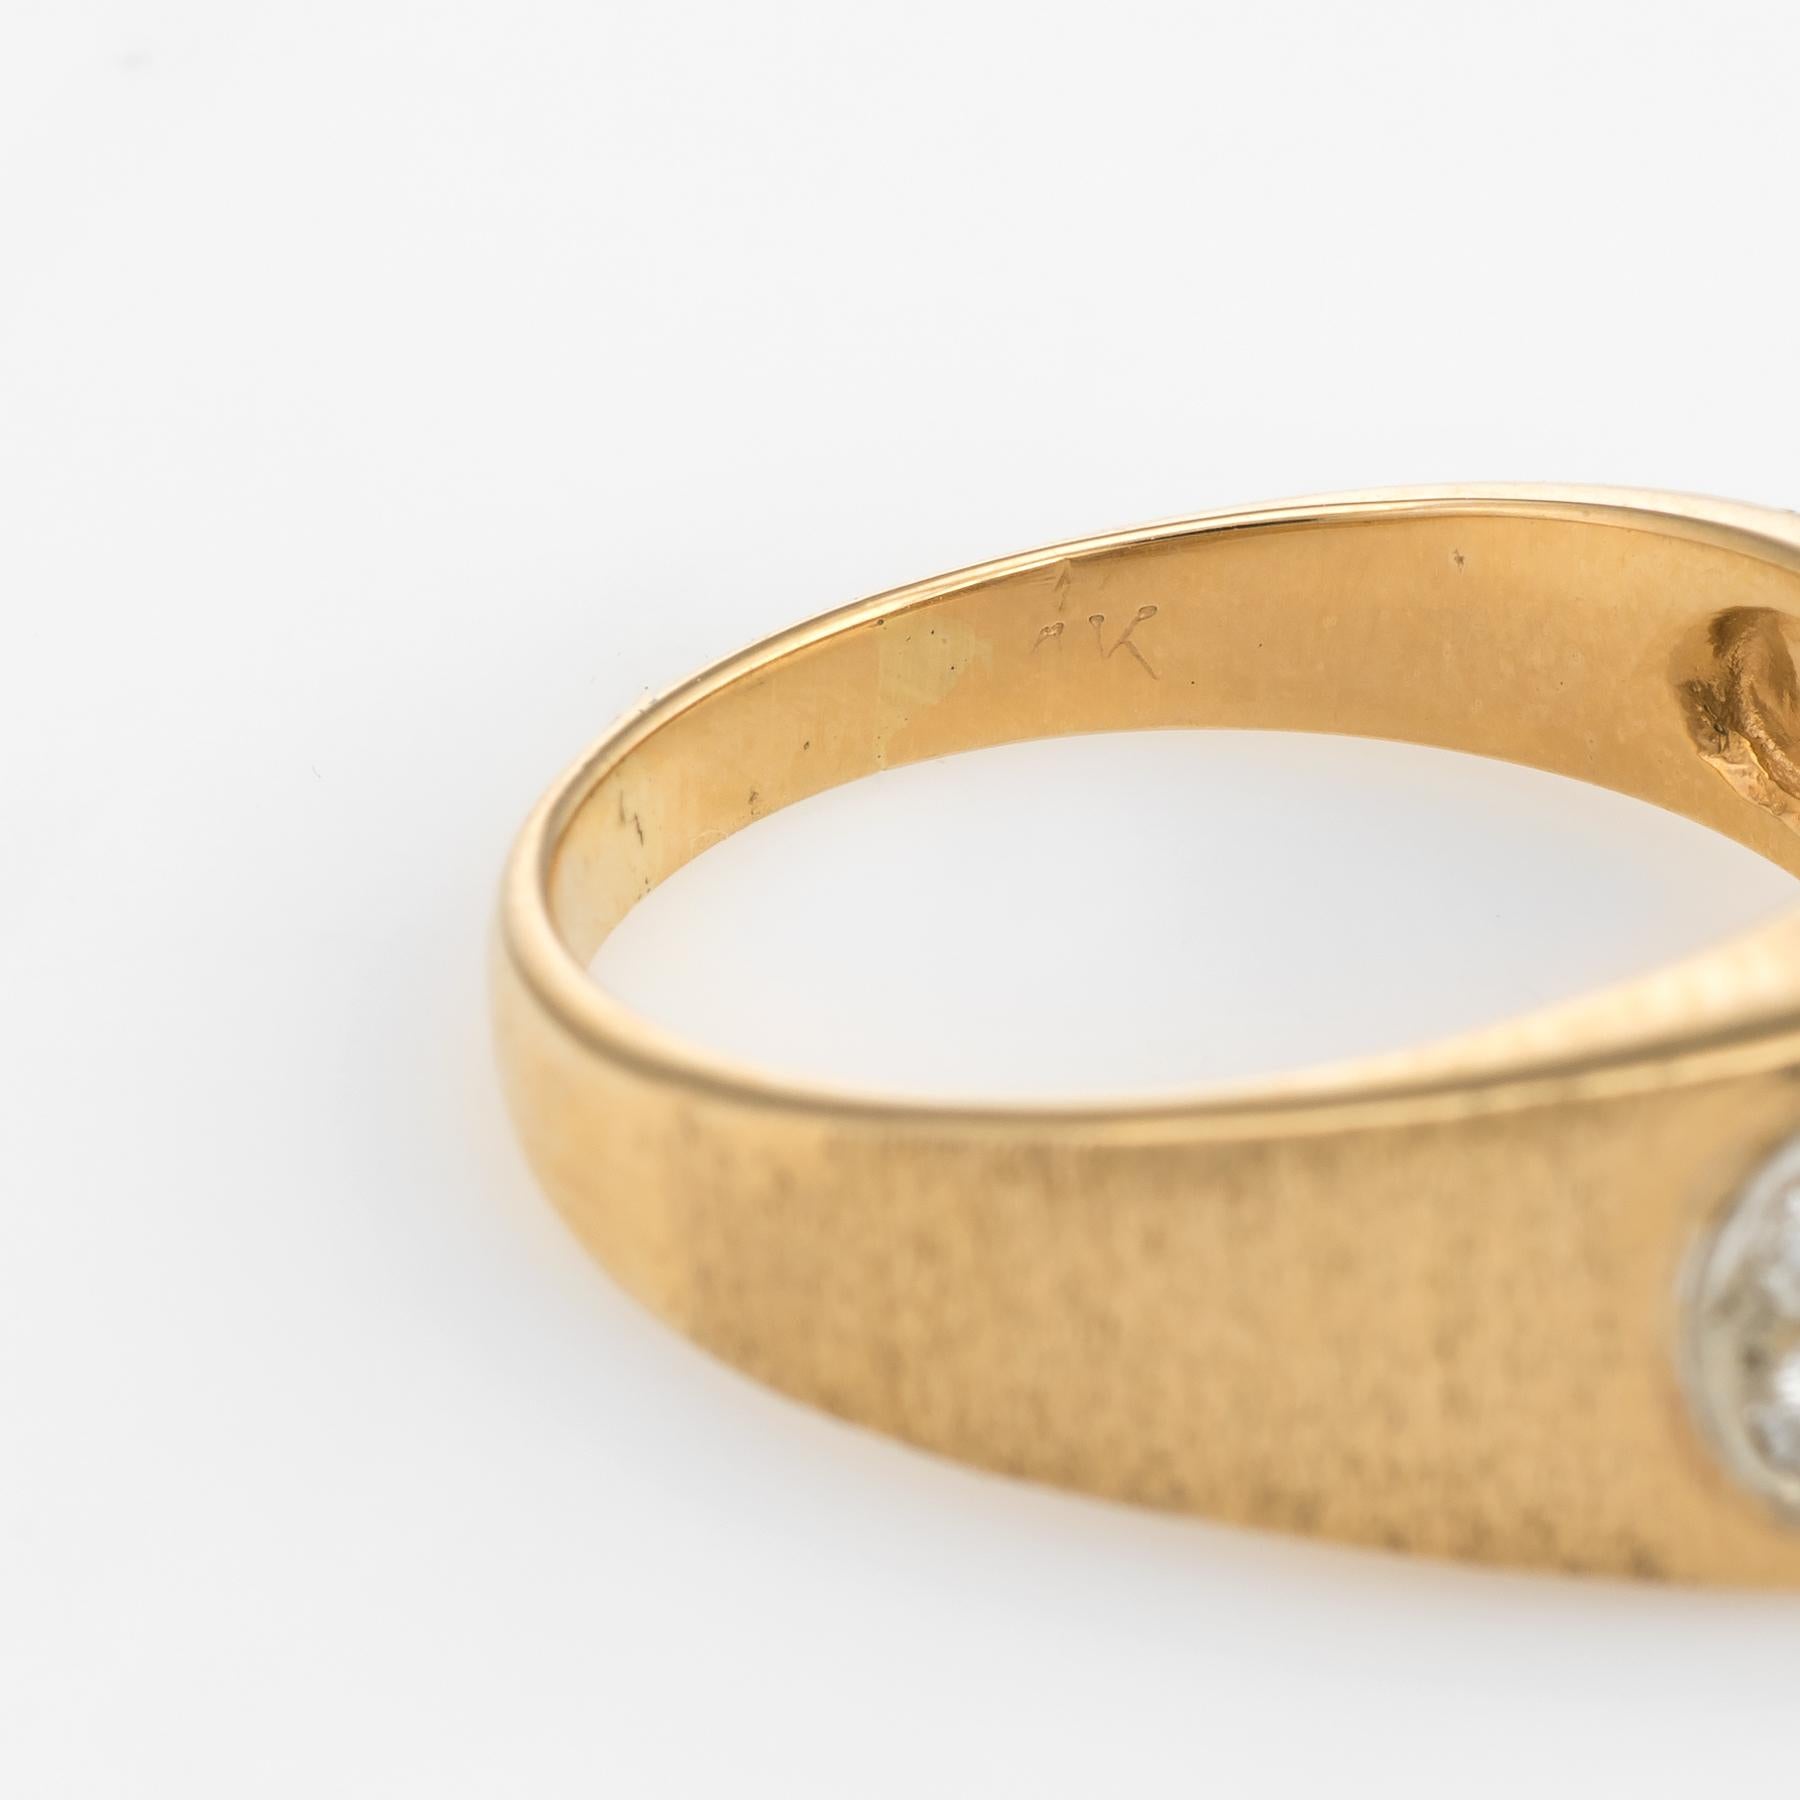 Vintage Pointed Diamond Ring 14k Yellow Gold Estate Fine Jewelry Satin Finish 2